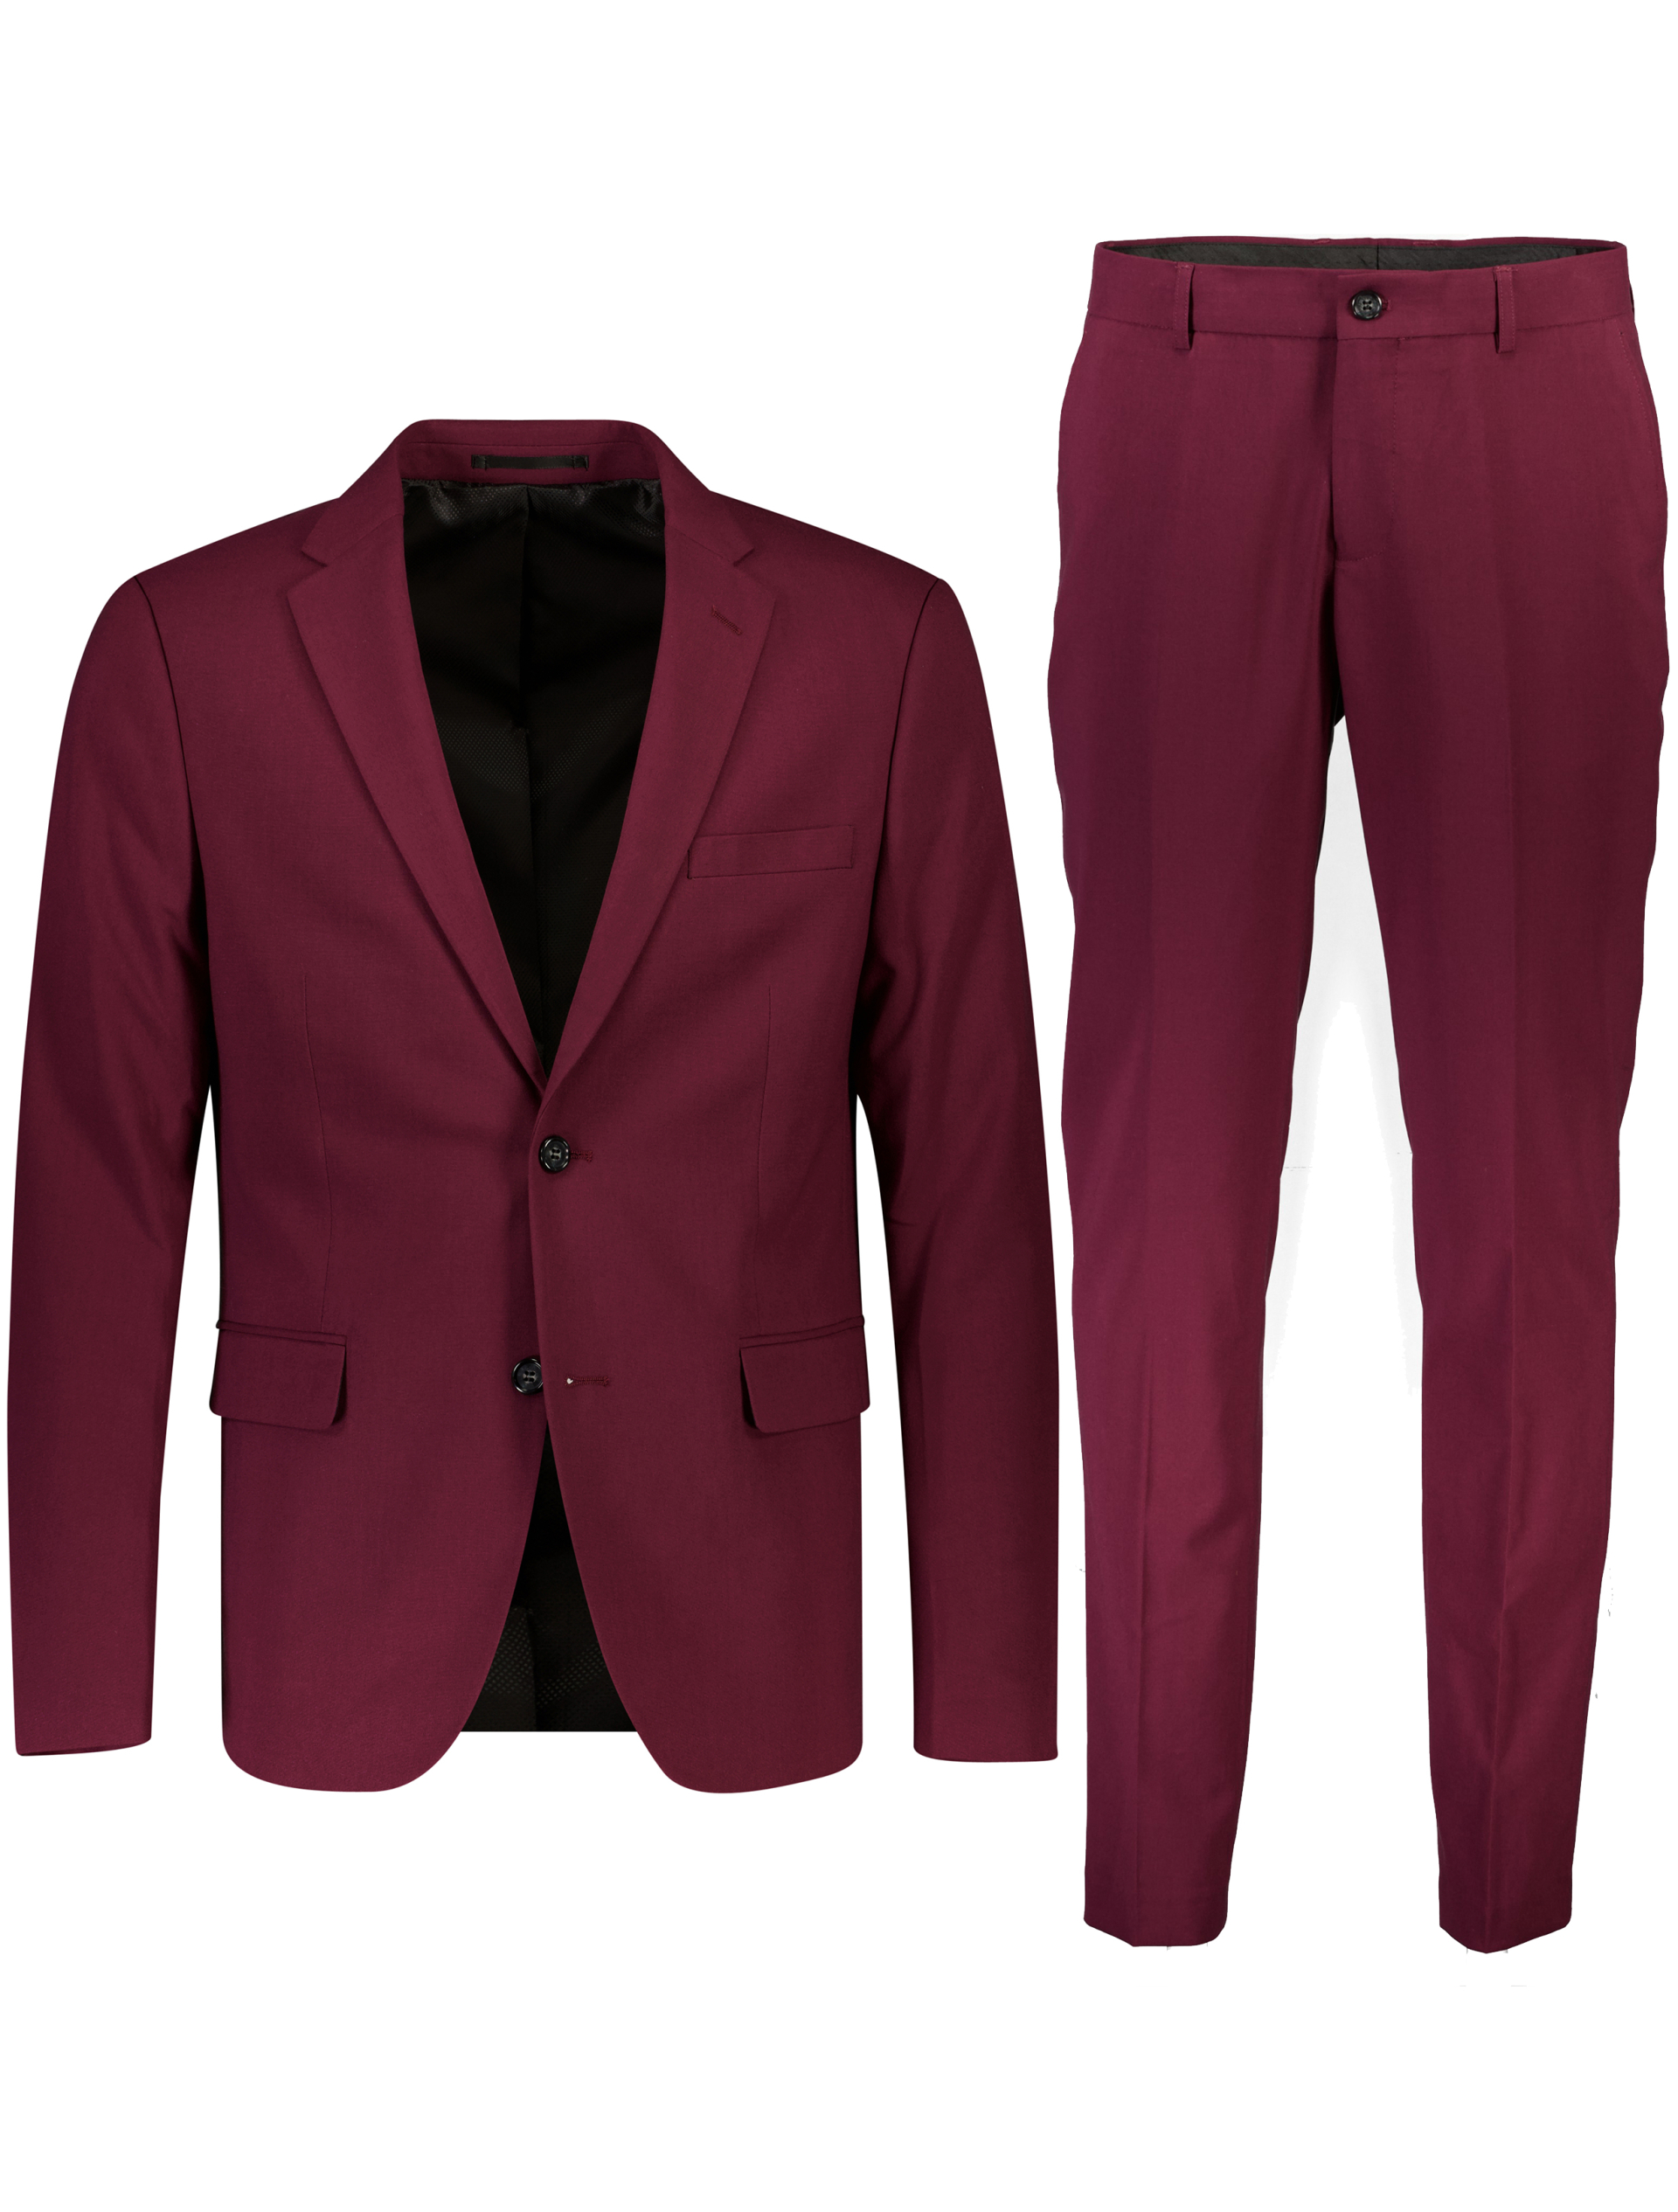 Lindbergh Suit red / burgundy